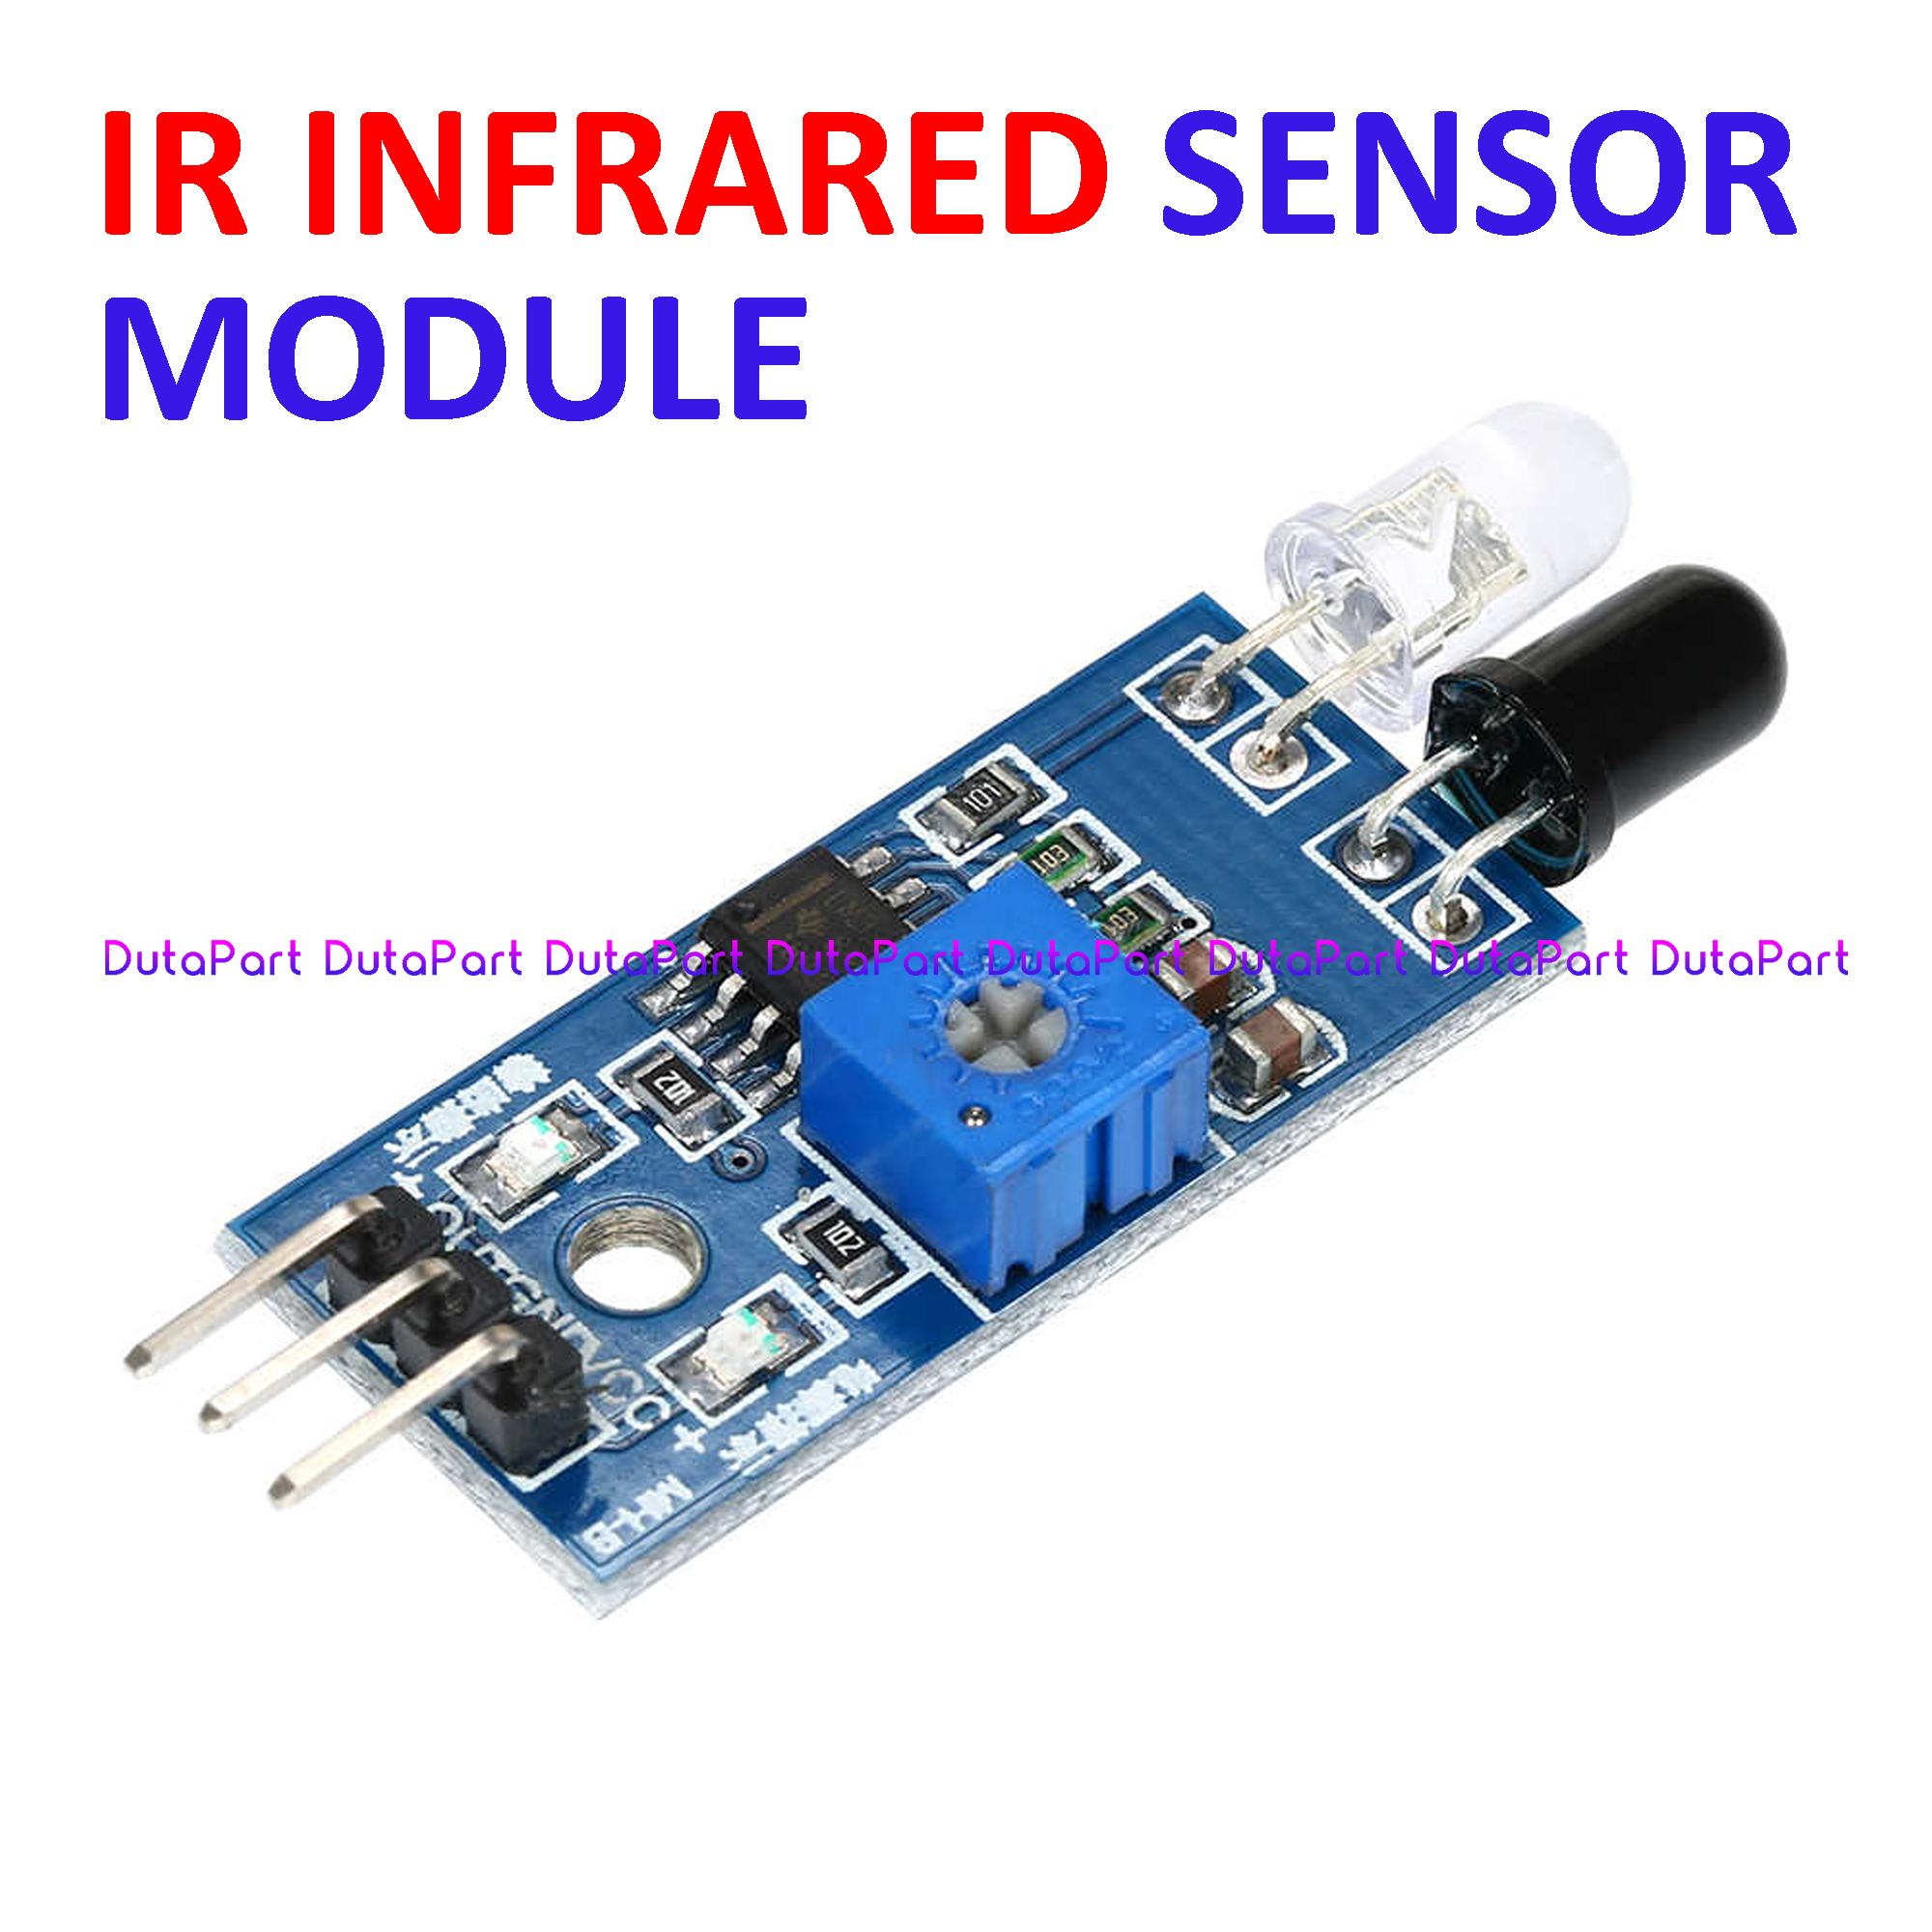 Jual Sensor Ir Infrared Terbaru - Jul 2022 | Lazada.co.id